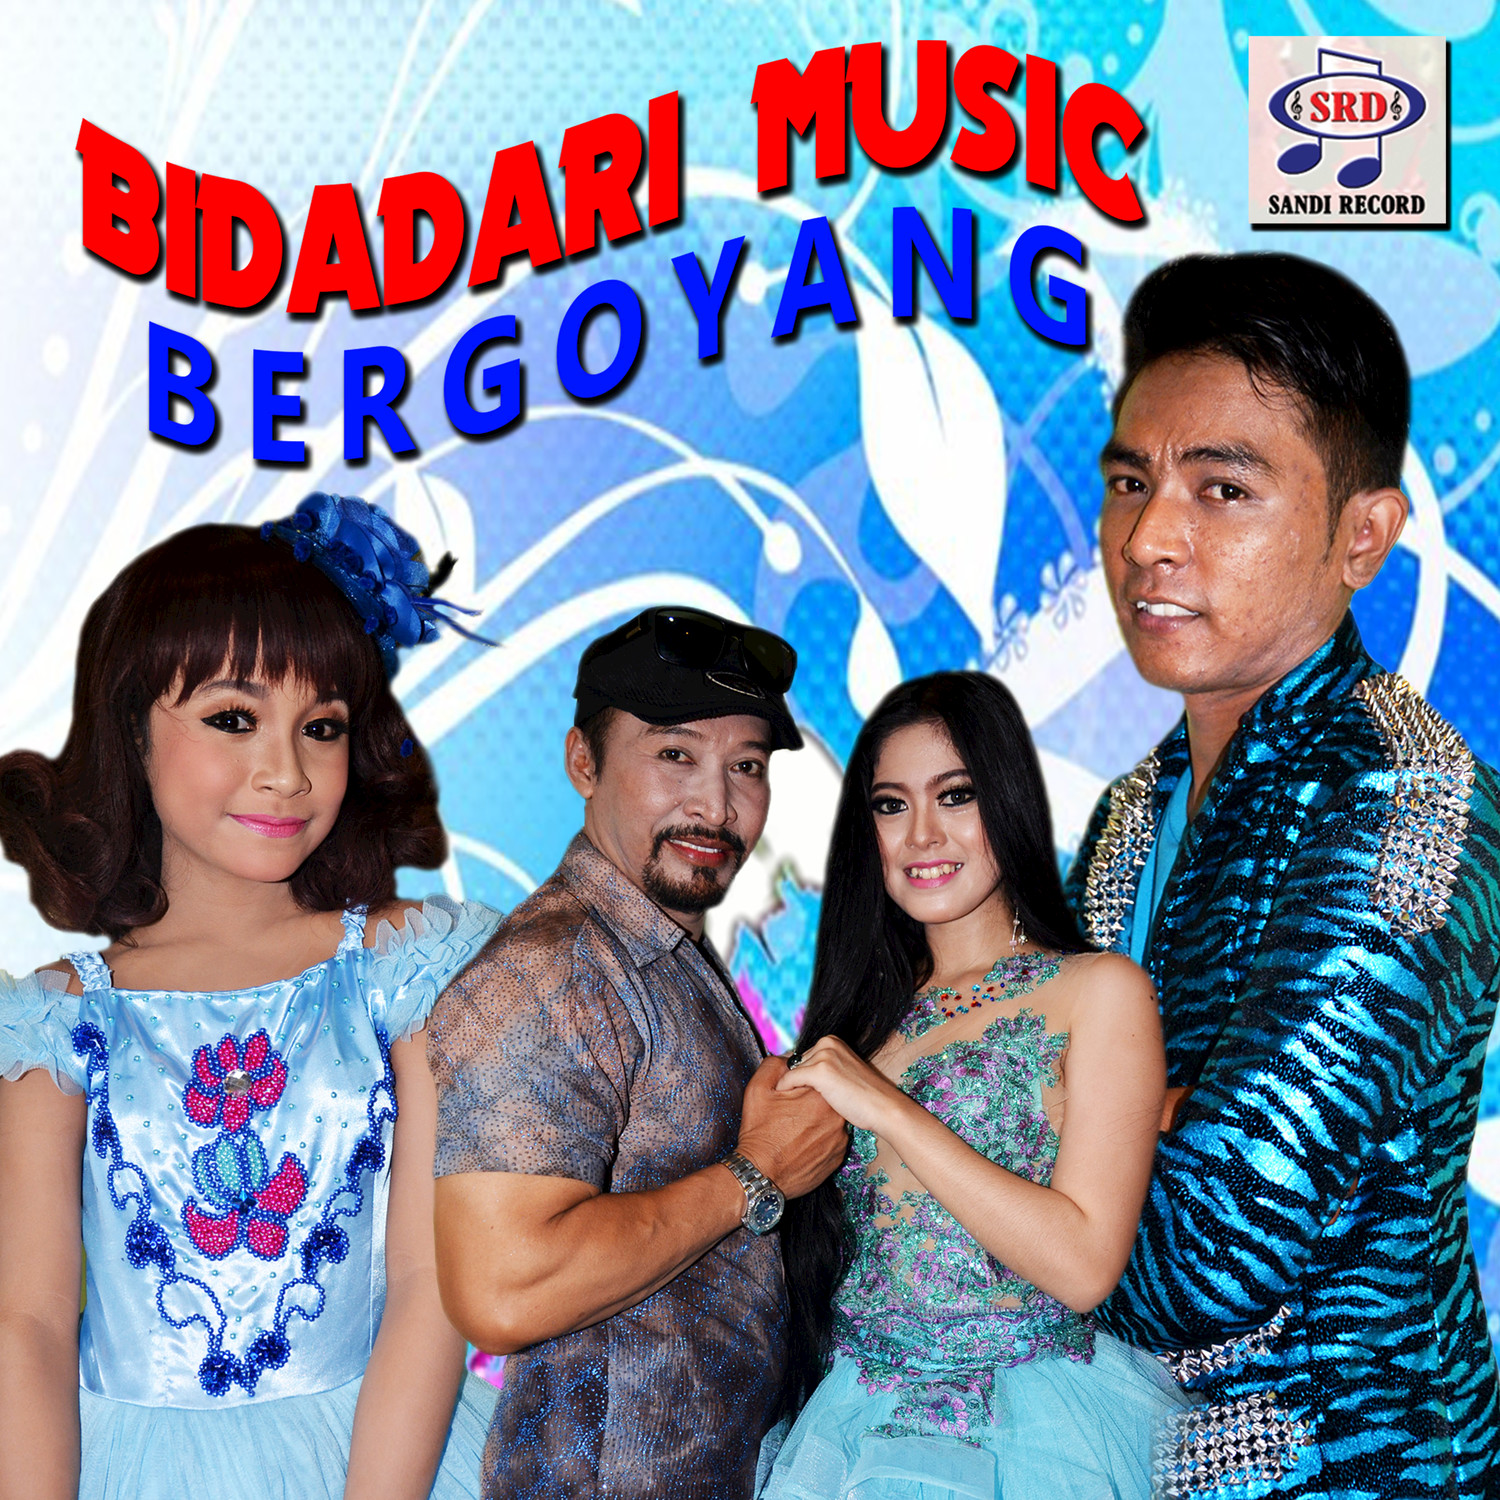 Bidadari Music Bergoyang